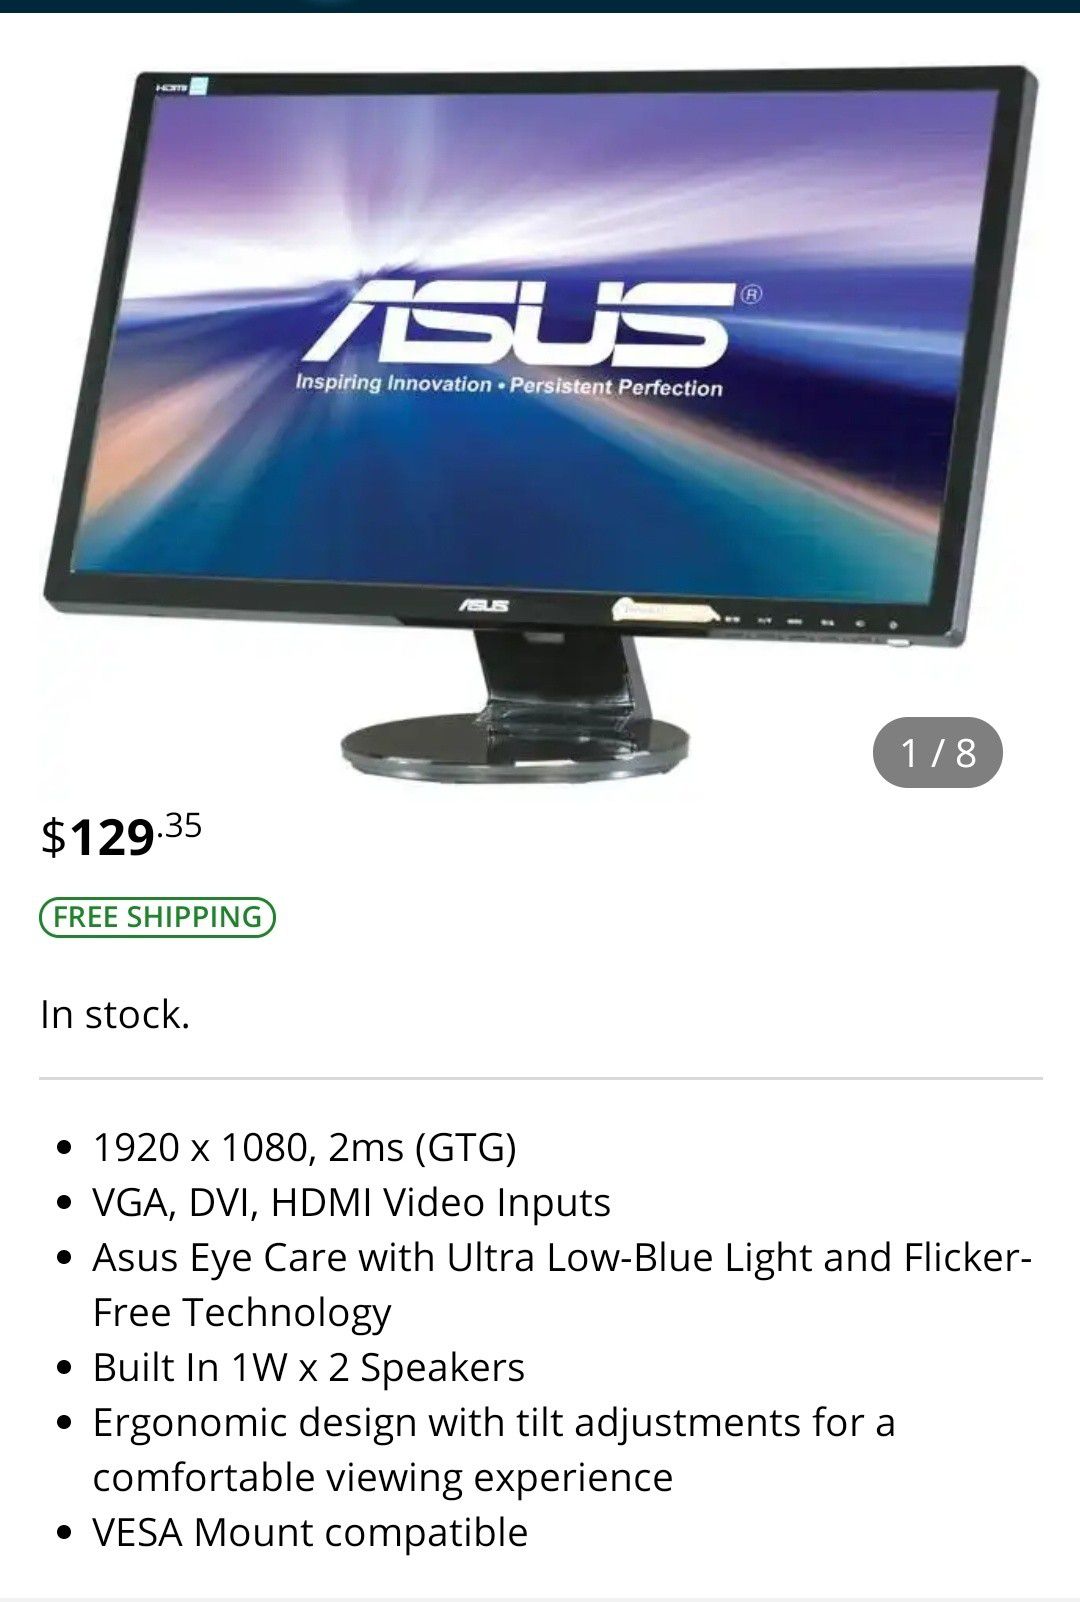 Acer / Asus 24" monitors